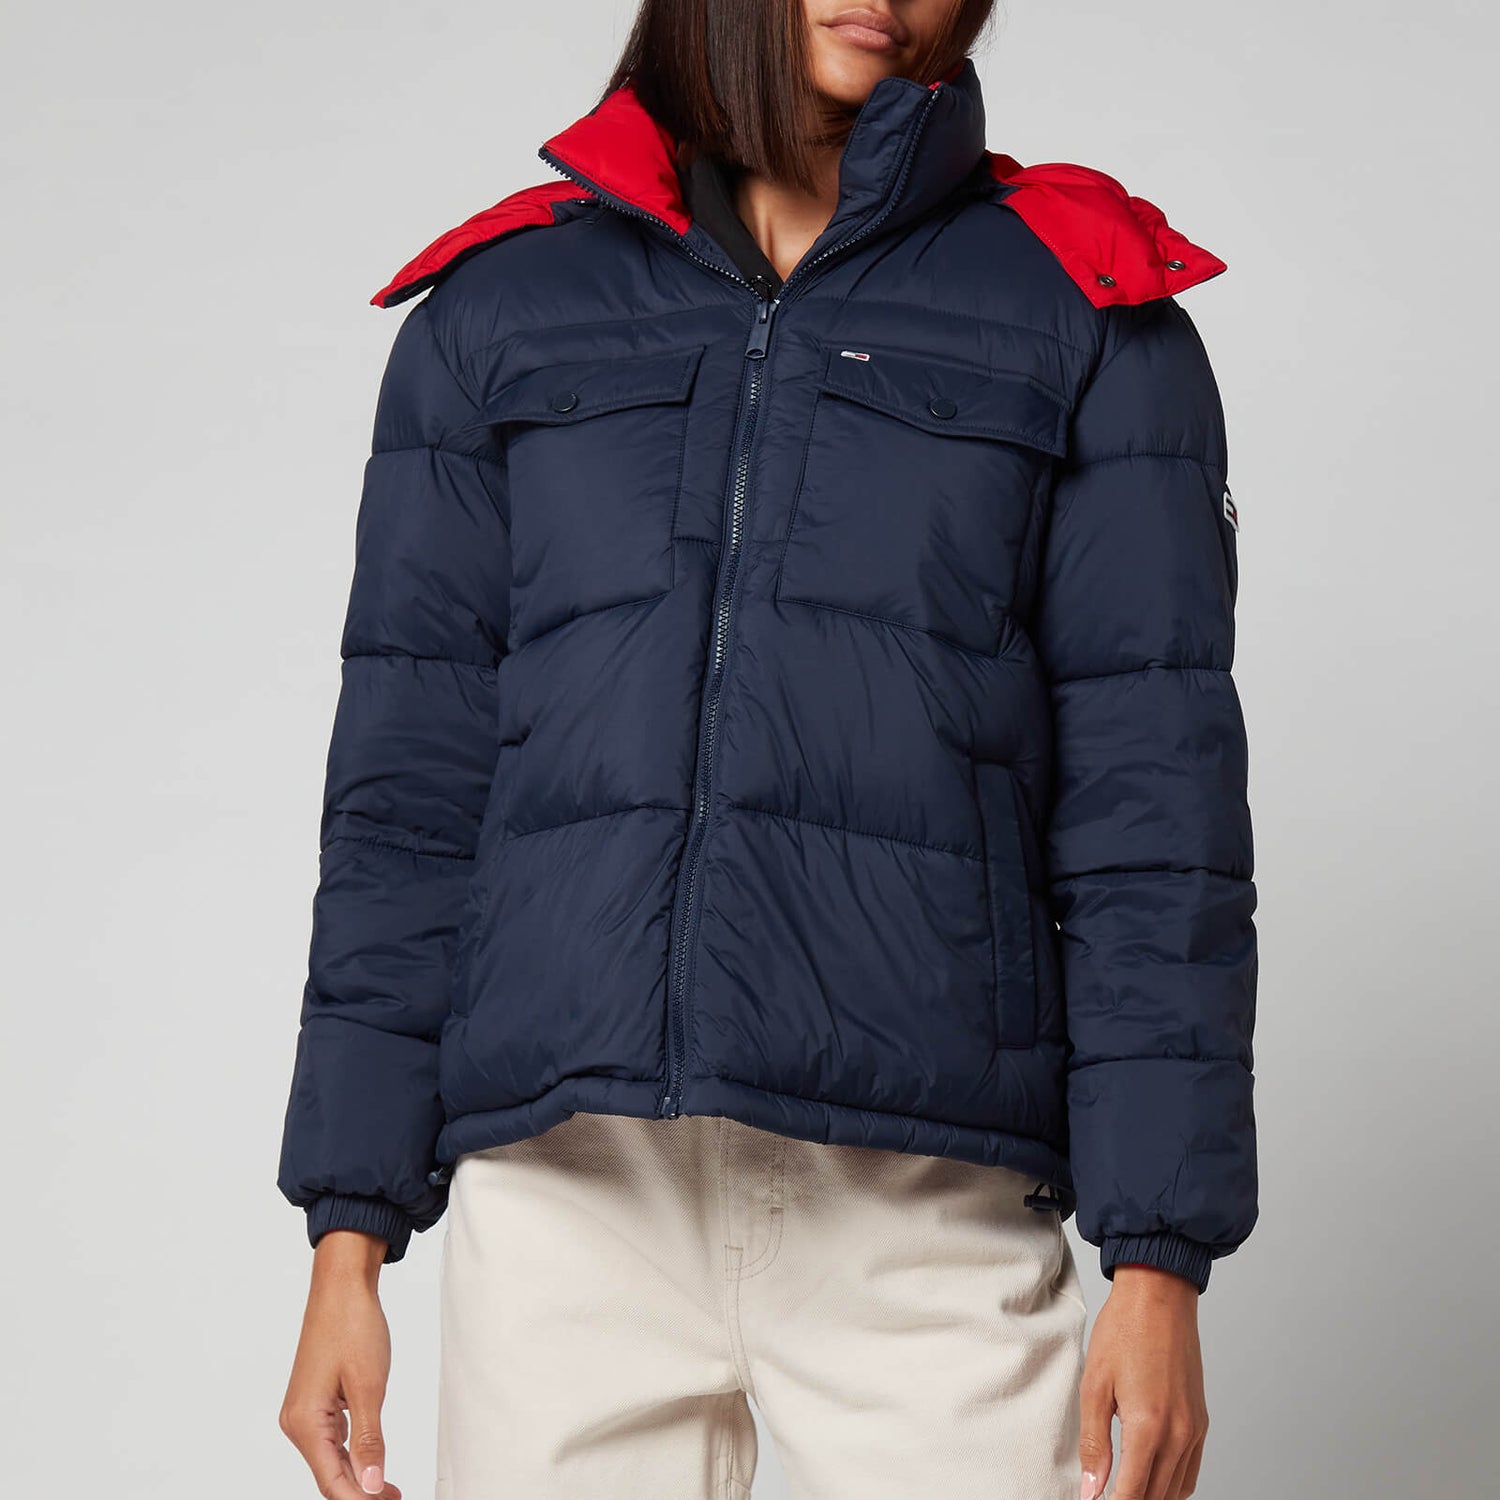 Tommy Jeans Women's Colourblock Contrast Hood Jacket - Twilight Navy - S